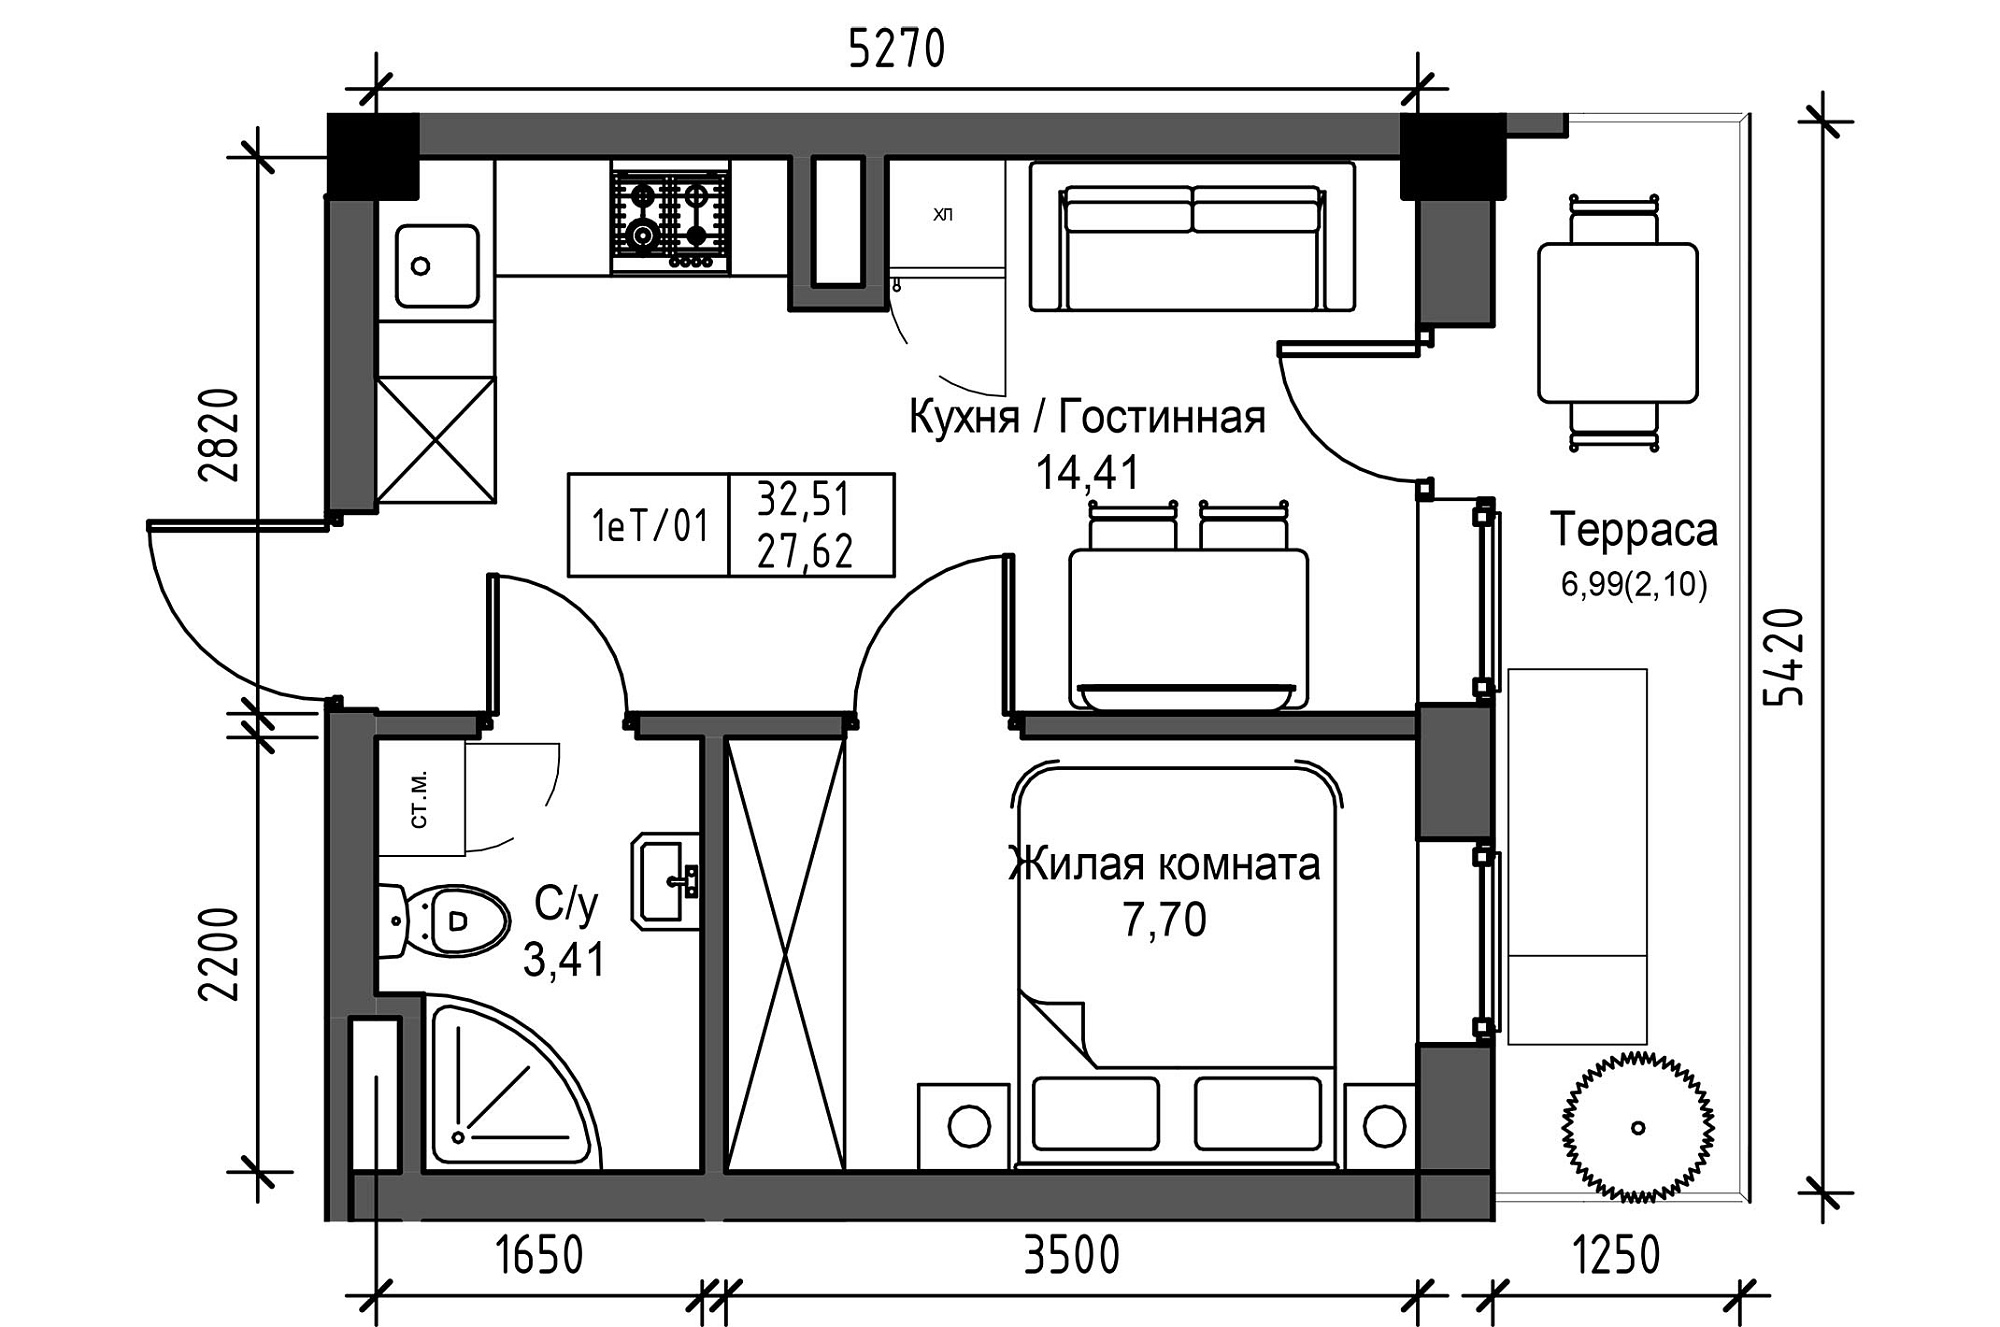 Планування 1-к квартира площею 27.62м2, UM-003-08/0078.